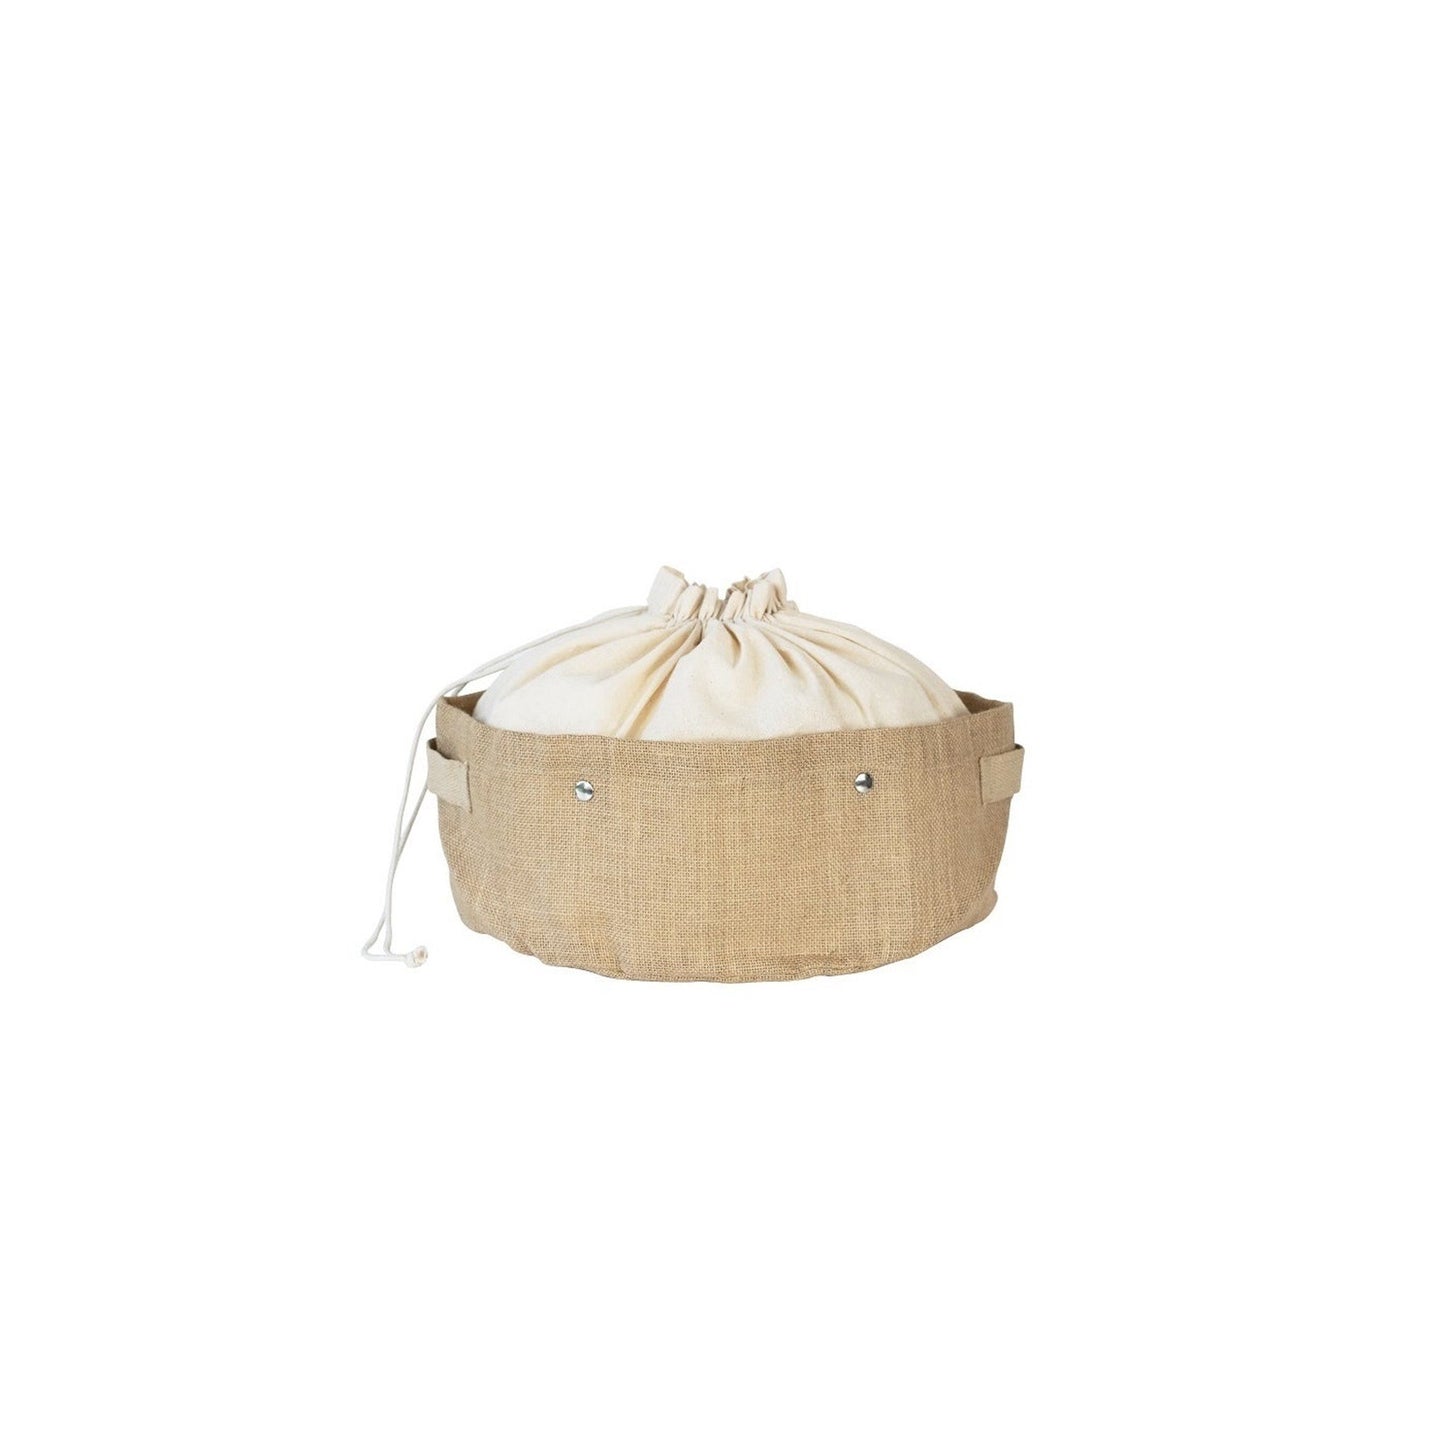 PEBBLY Storage basket w/removable bag - KitchenEnvy